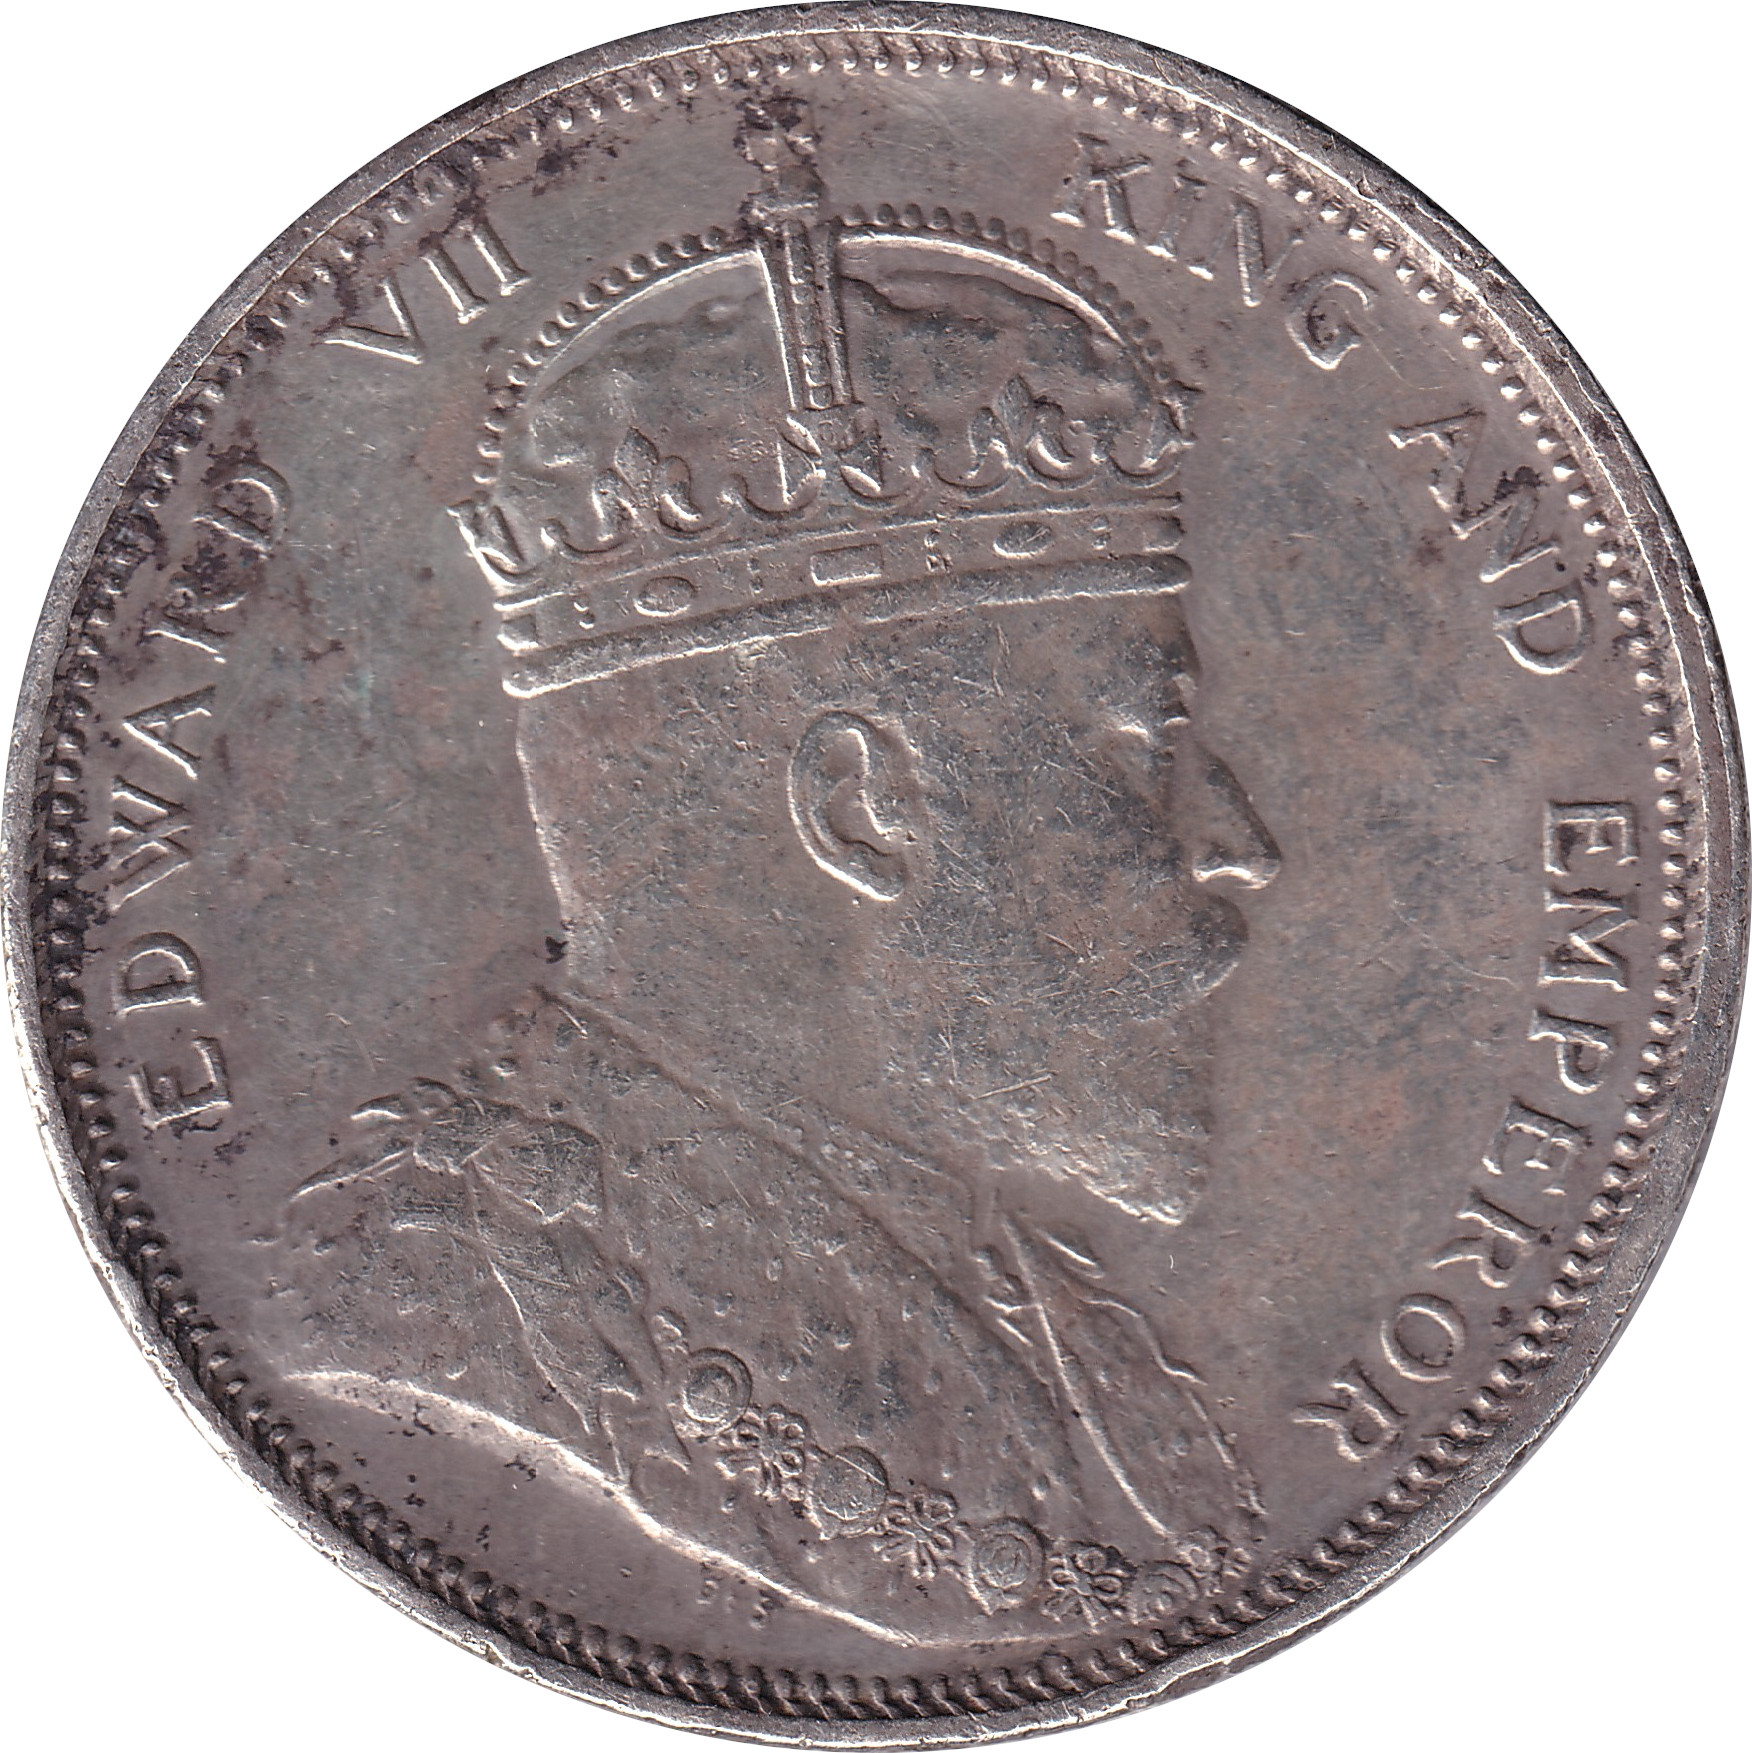 1 dollar - Edward VII